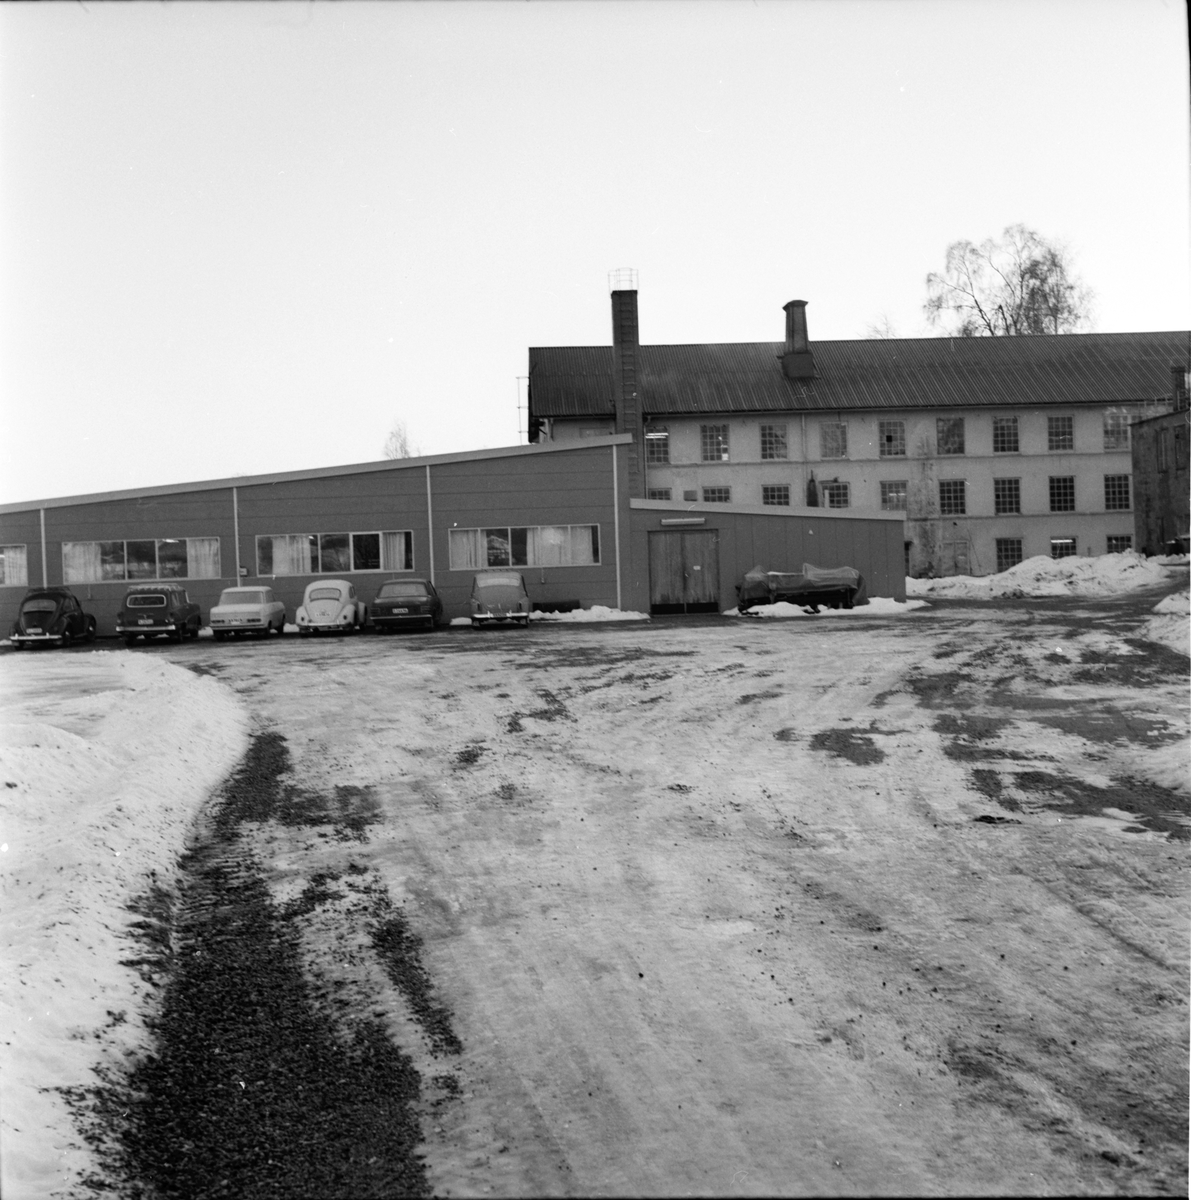 Arbrå,
Forsbro ylle,
Februari 1969